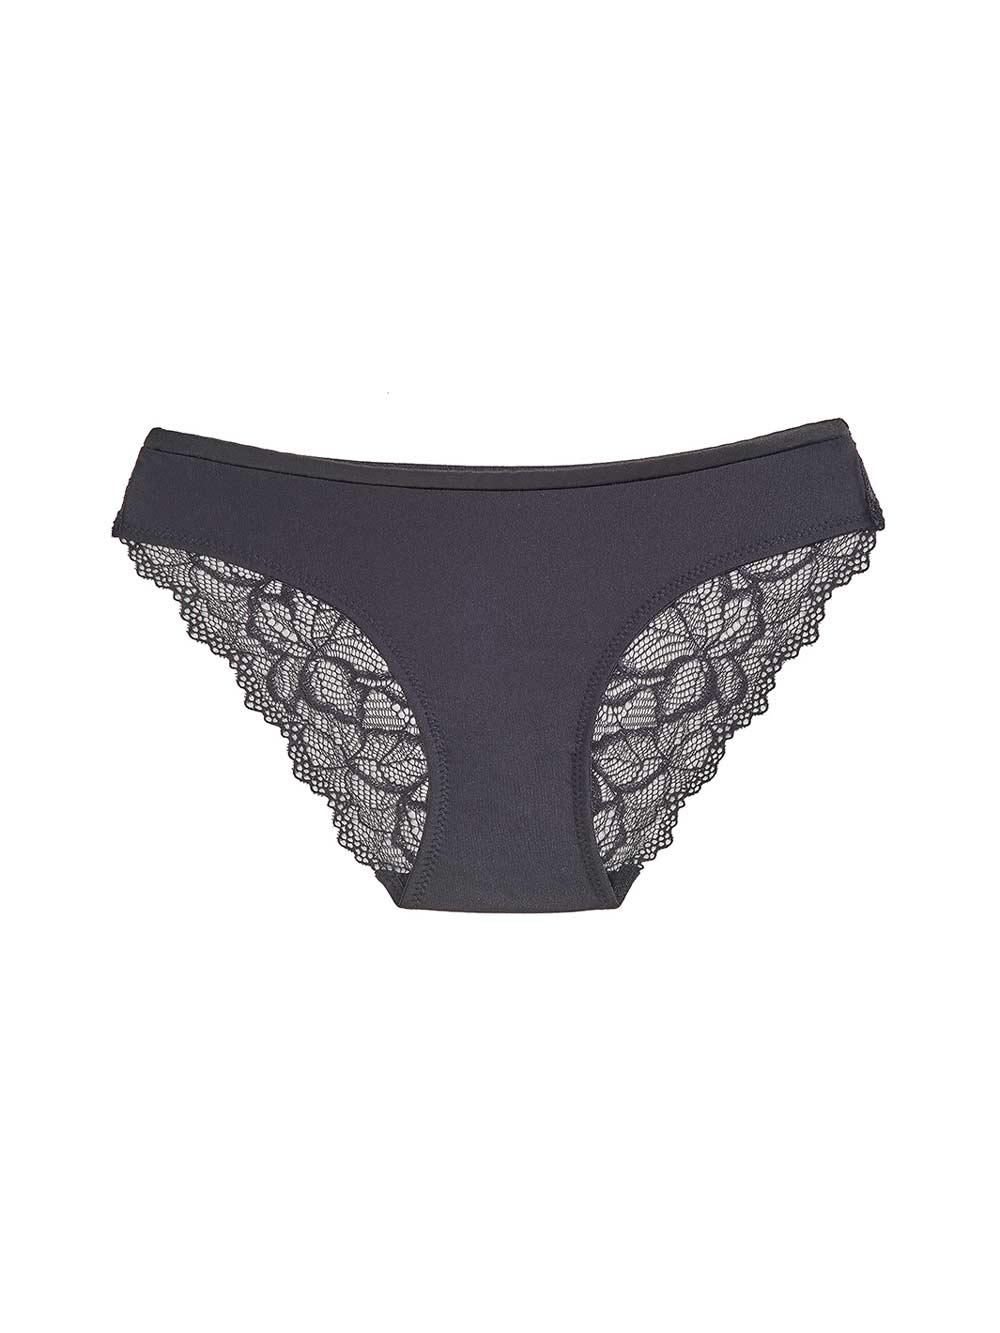 Heather Cotton Crotch Lace Detail Black Panty